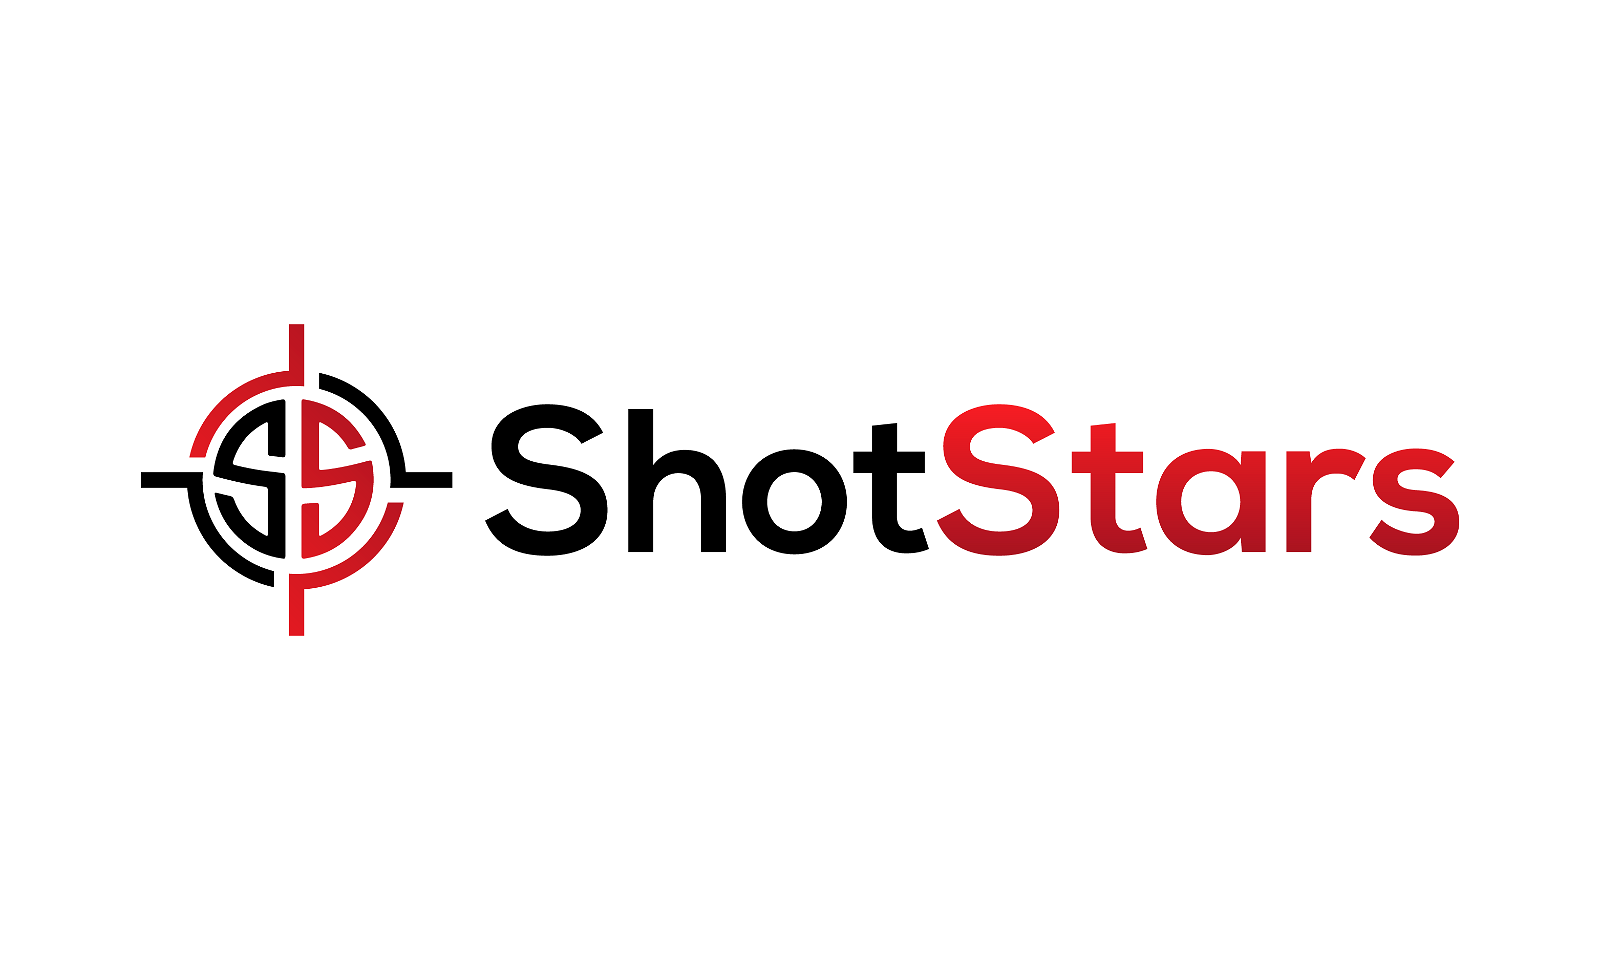 ShotStars.com - Creative brandable domain for sale